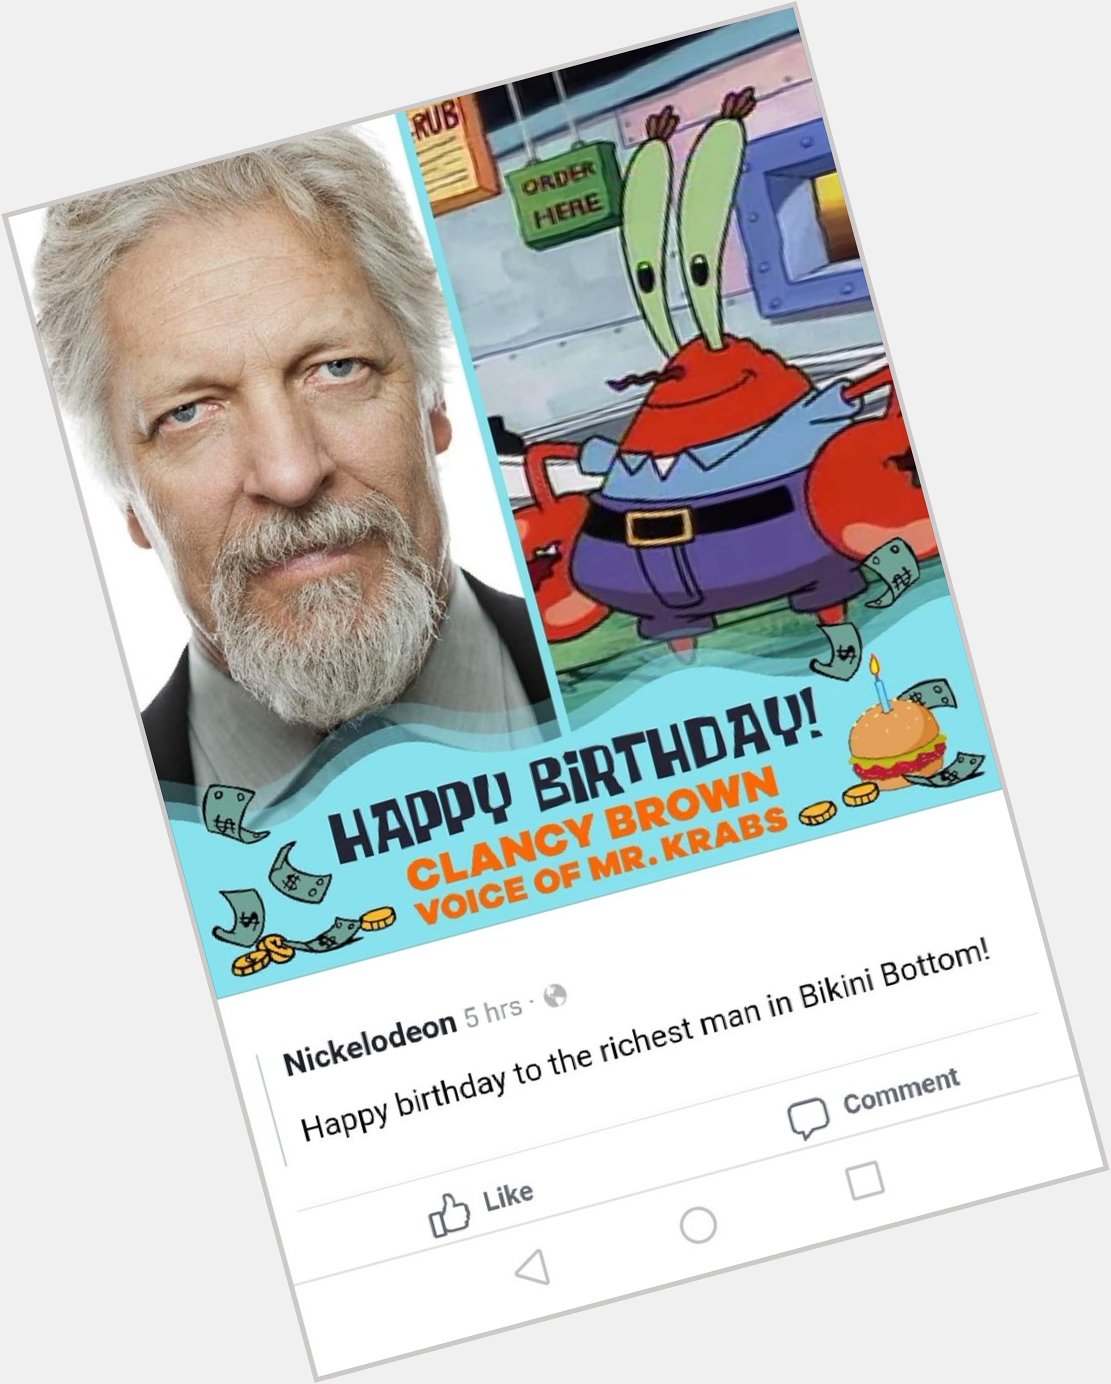 Happy birthday Clancy Brown aka eugene Krabs!   